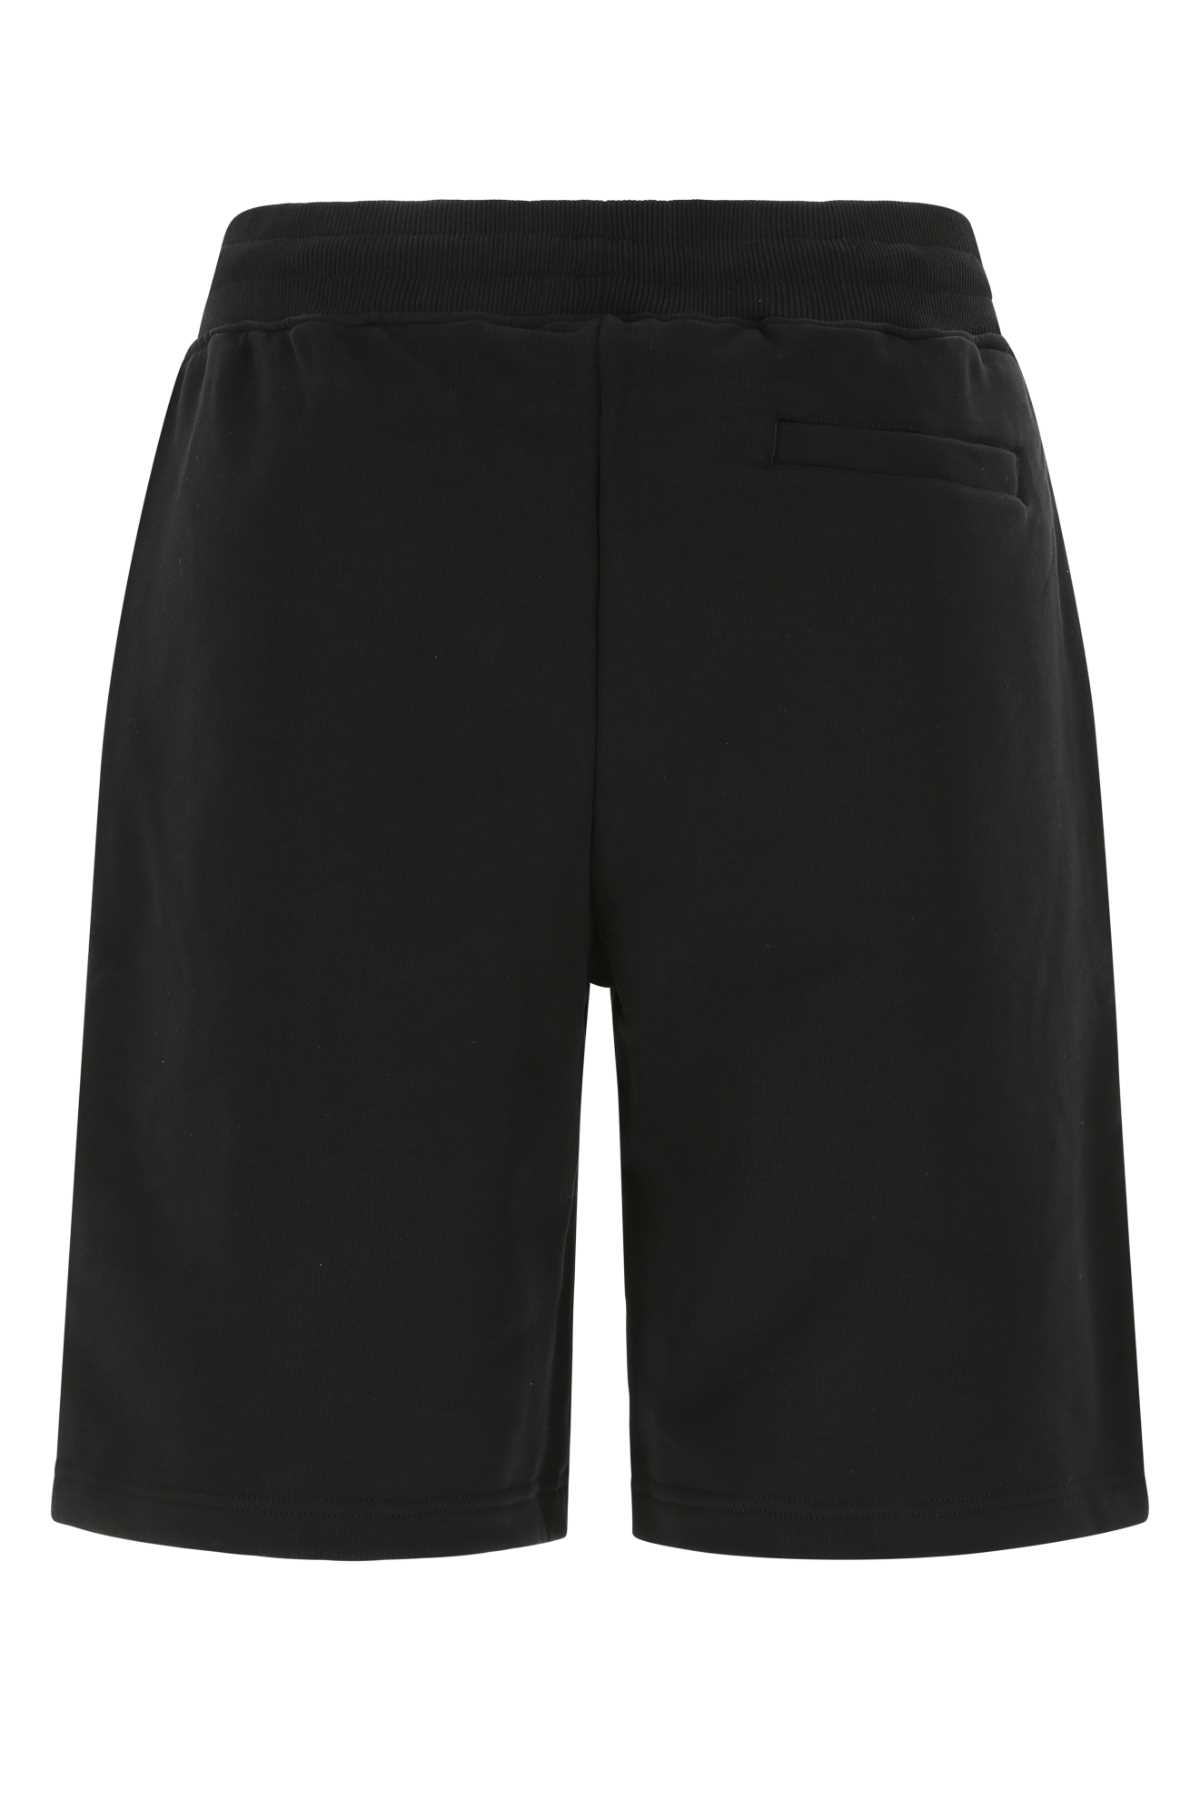 A-cold-wall* Black Cotton Bermuda Shorts